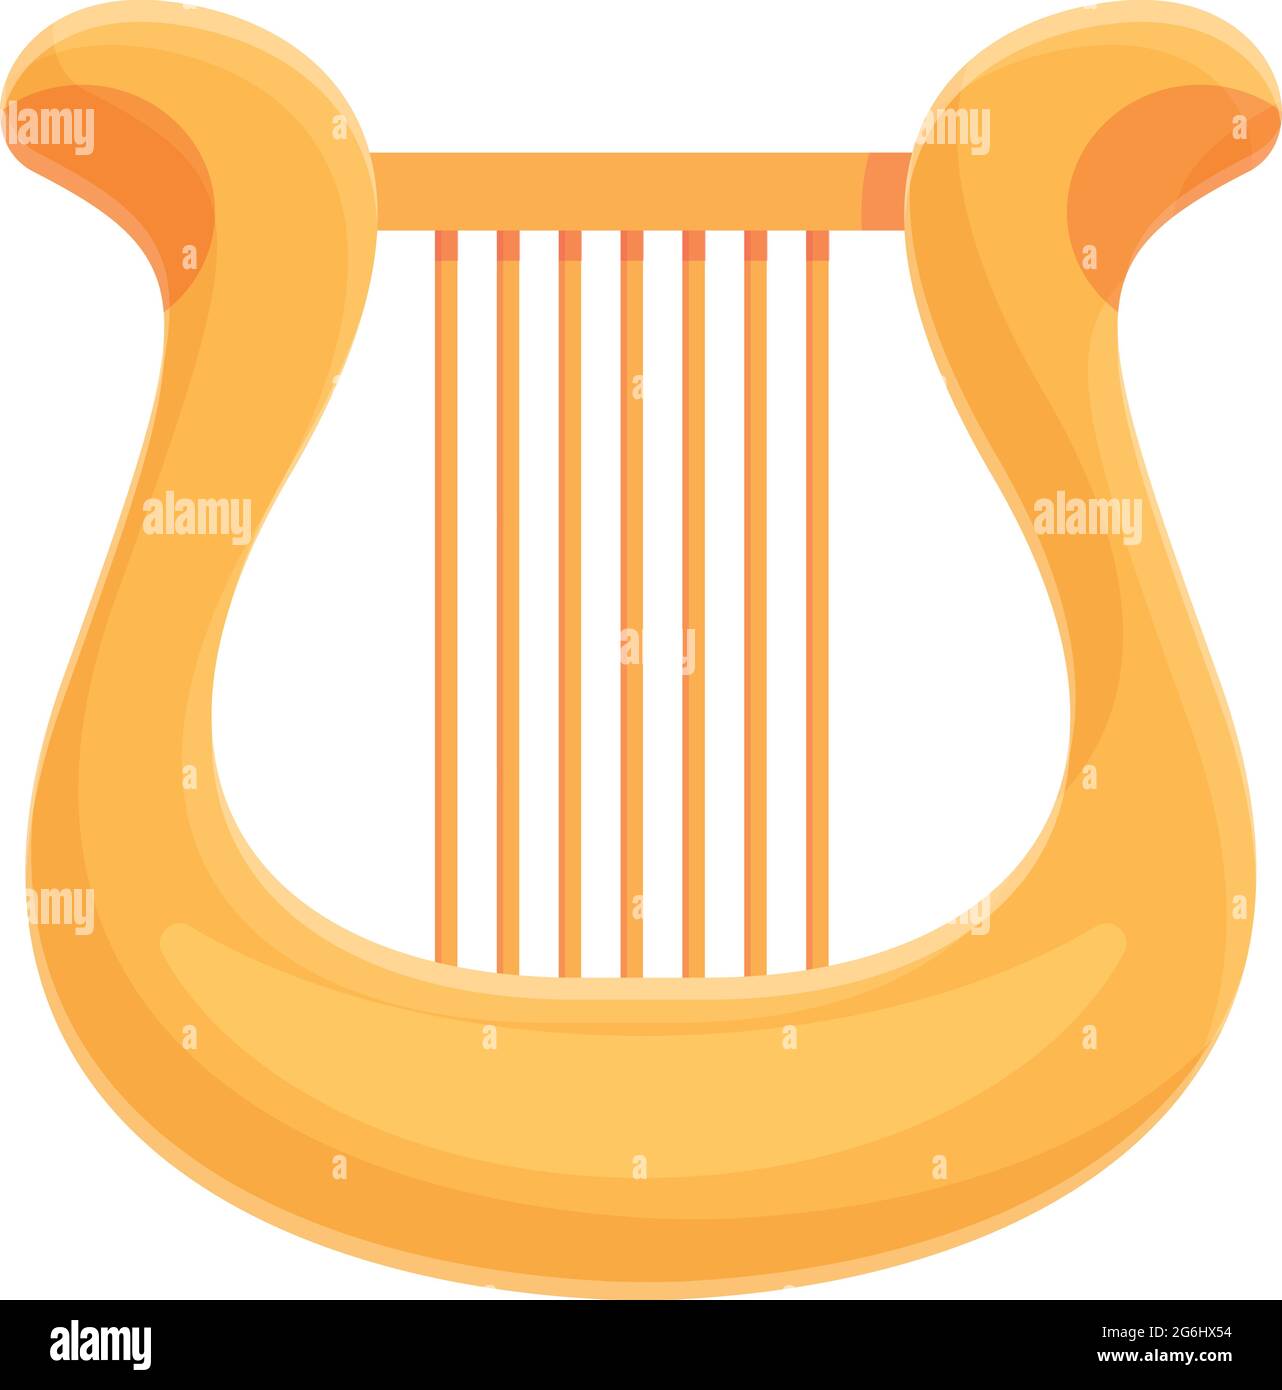 Mittelalterliche Harfe Symbol Cartoon-Vektor. Altes Musikinstrument. Keltische Harfe Stock Vektor